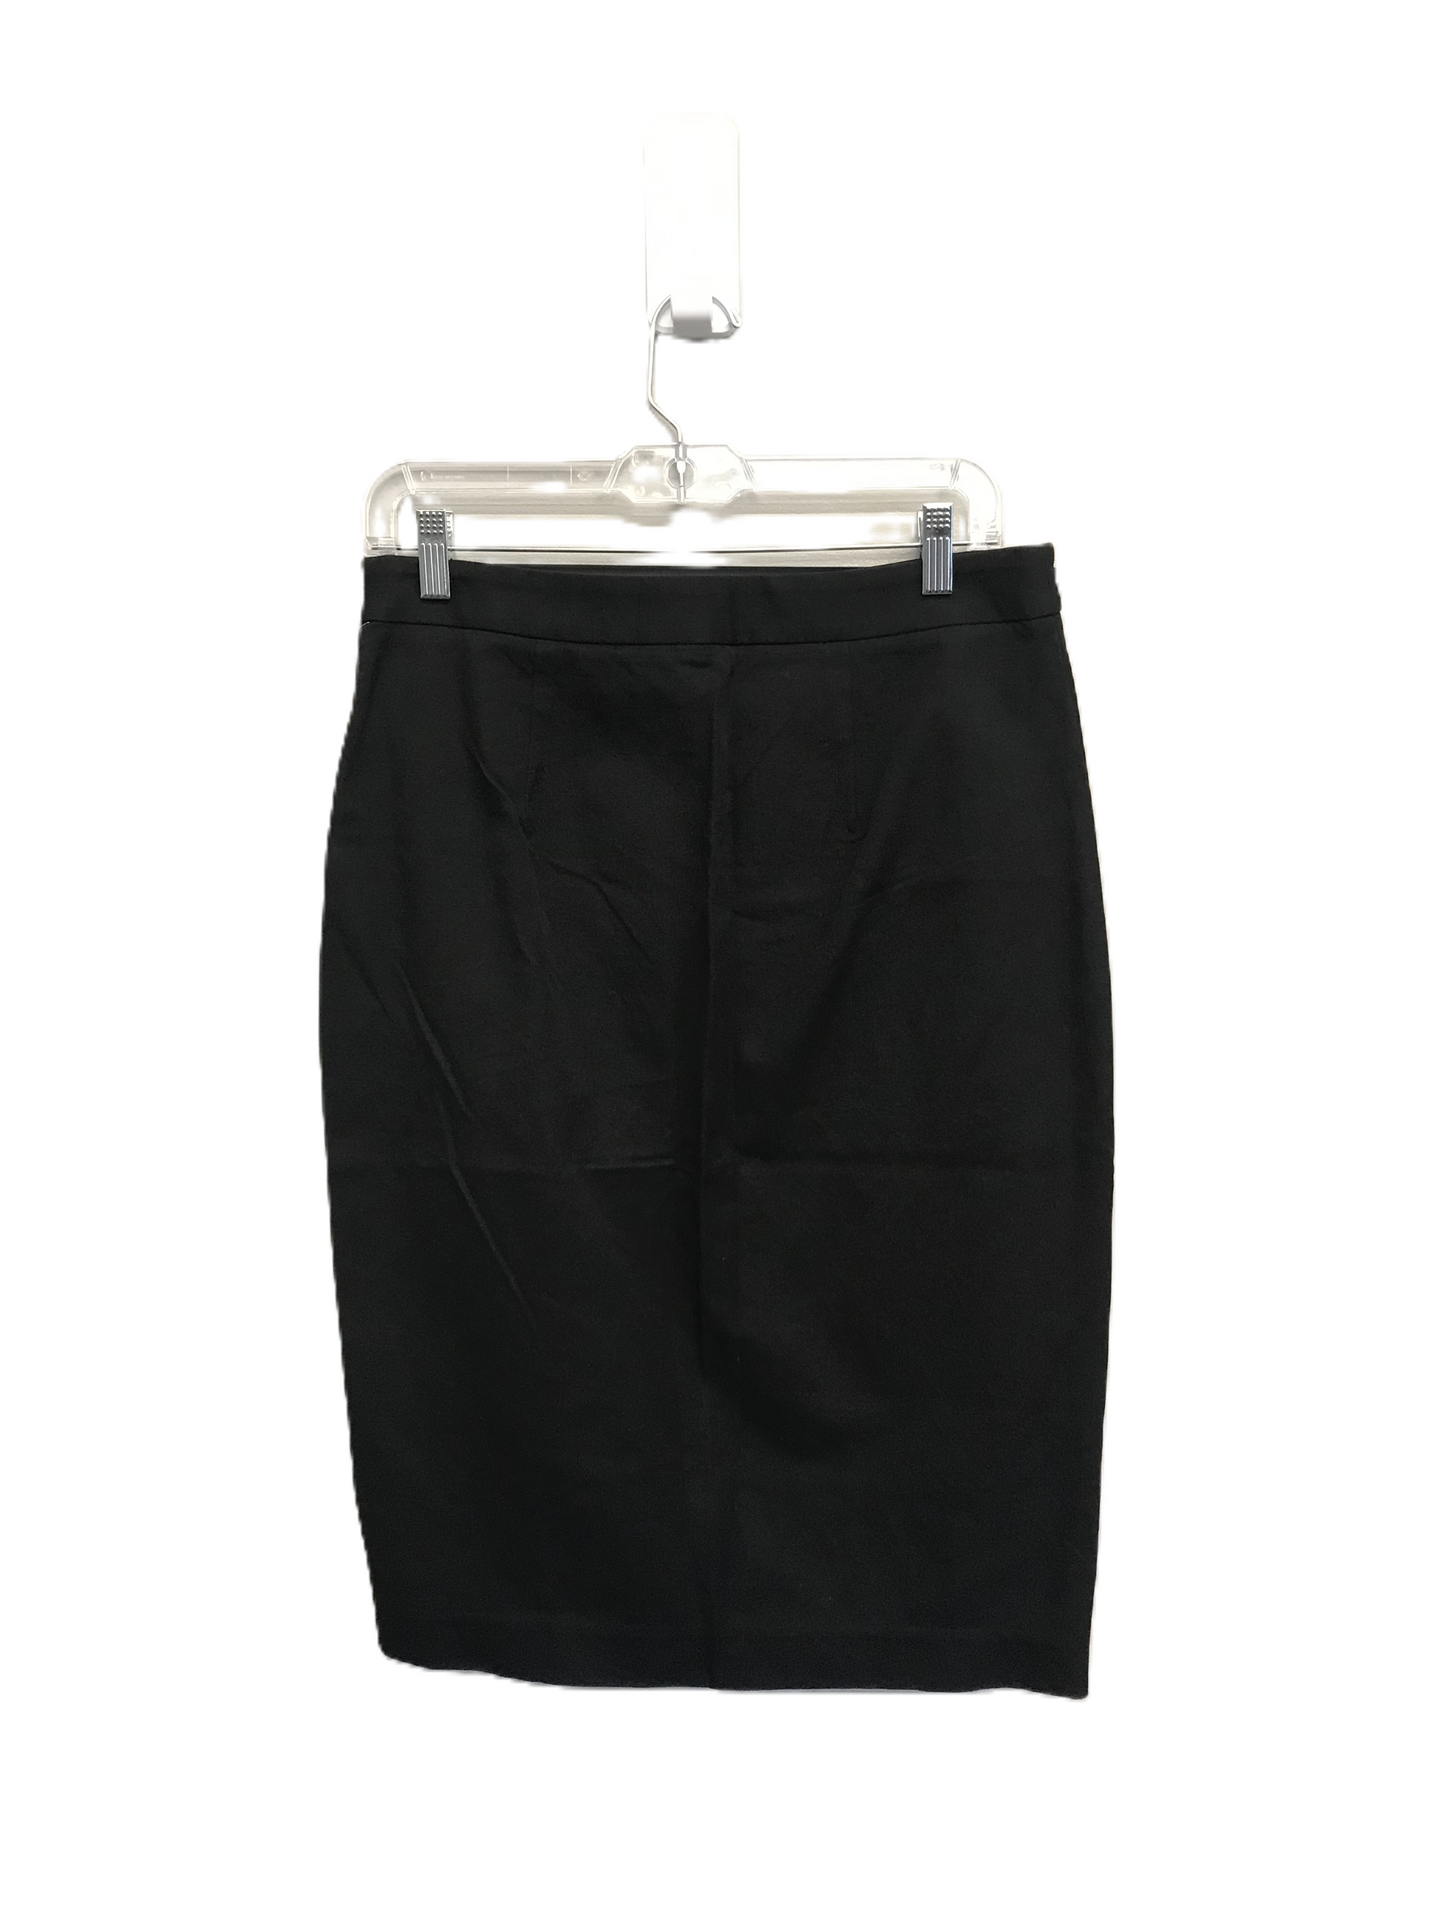 Black Skirt Midi By Banana Republic, Size: 6